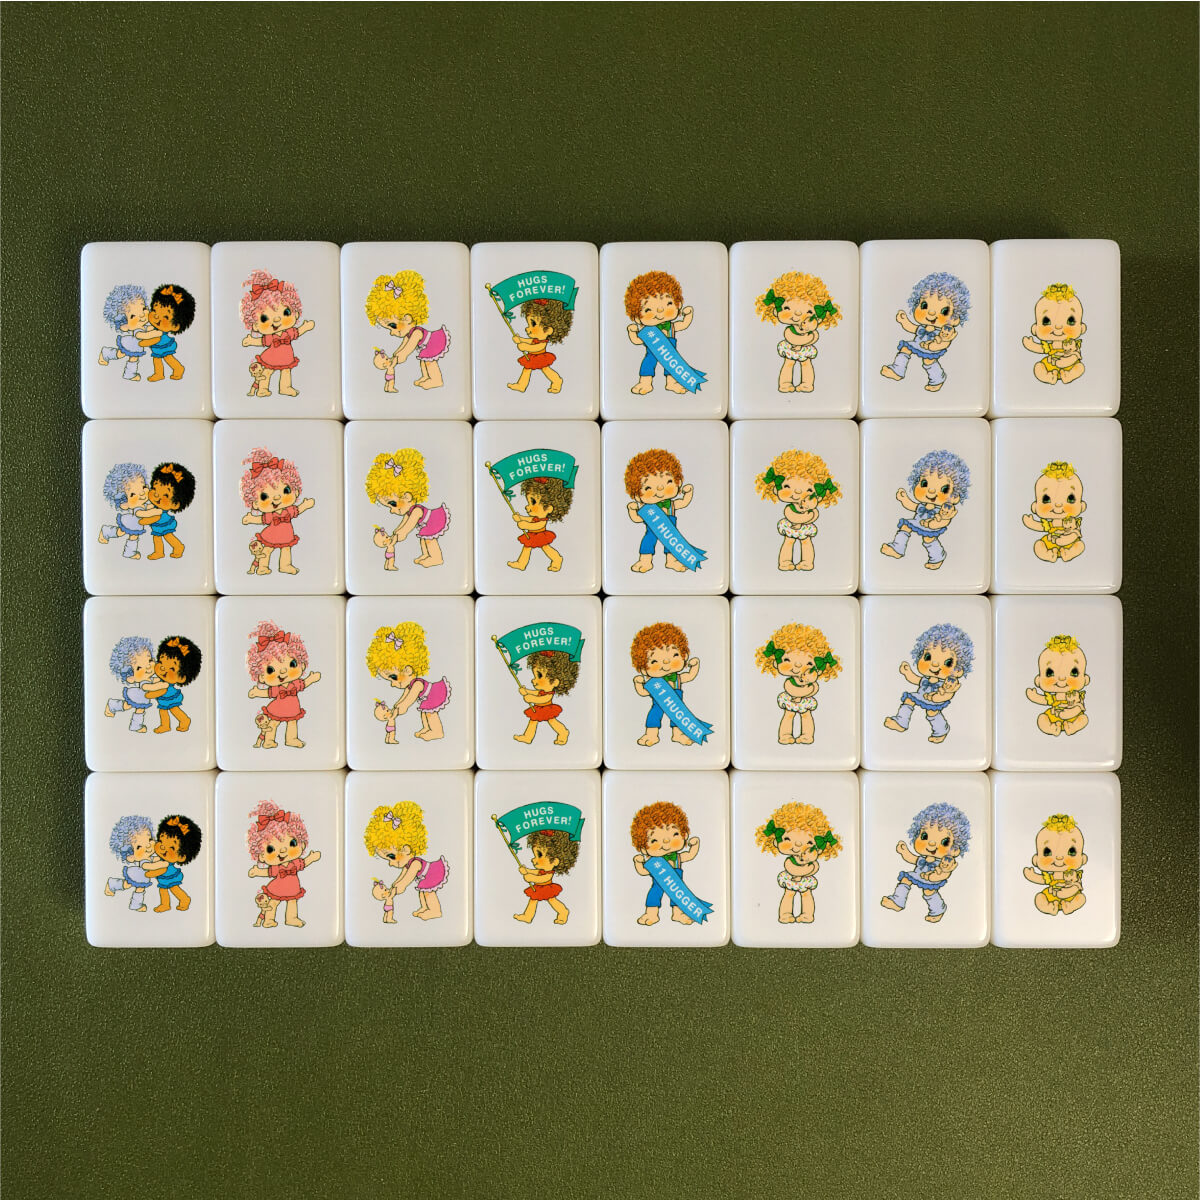 Seaside Escape Tile Game Hugga Bunch 33 blocks X-Large mahjong(for one player)